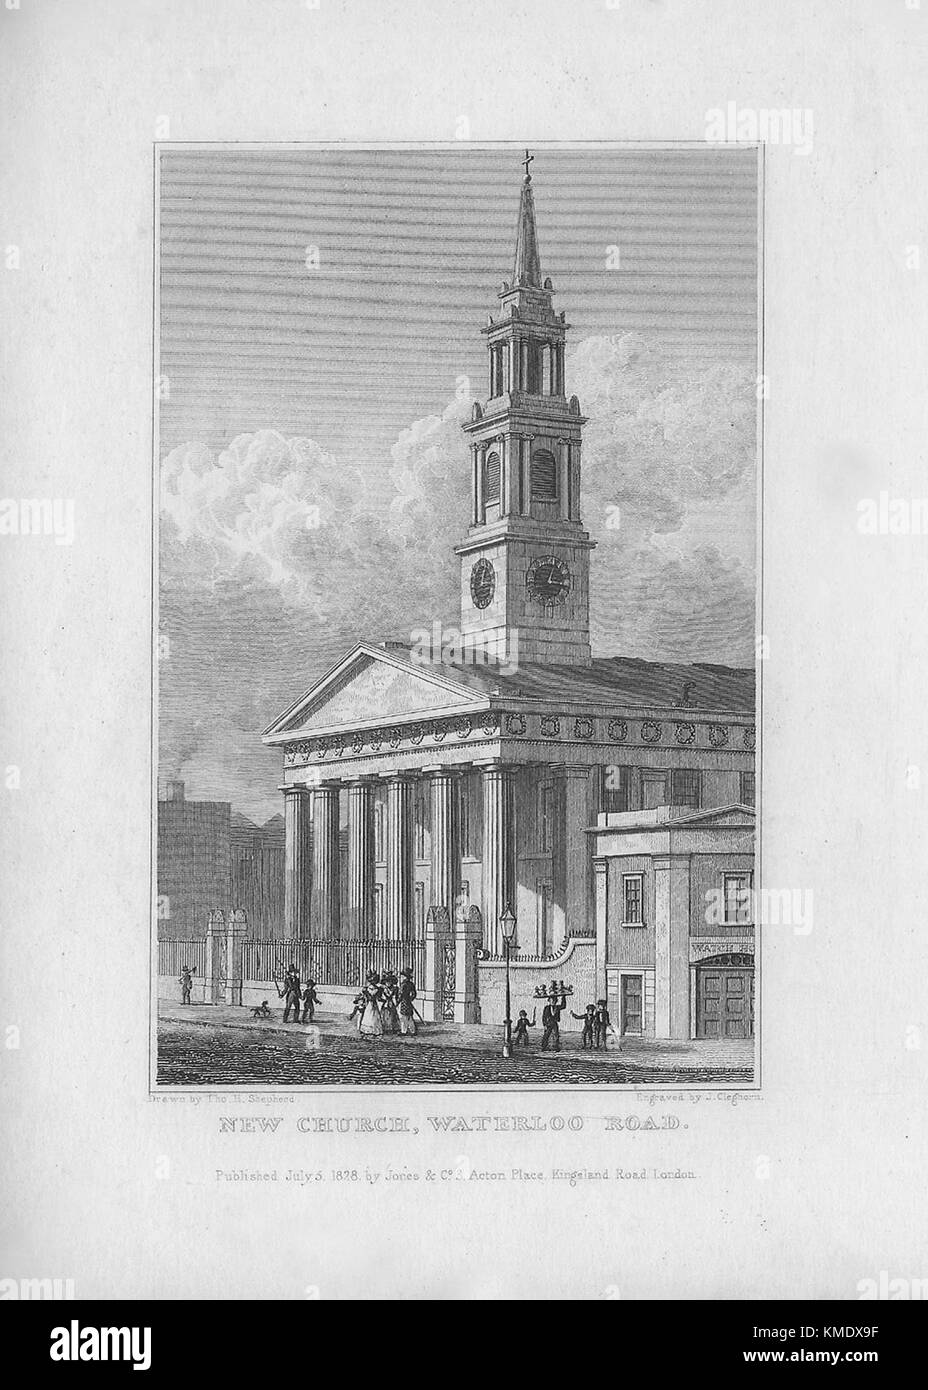 New Church, Waterloo Road, engraving 'Metropolitan Improvements, or London in the Nineteenth Century' London, England, UK 1828 Stock Photo